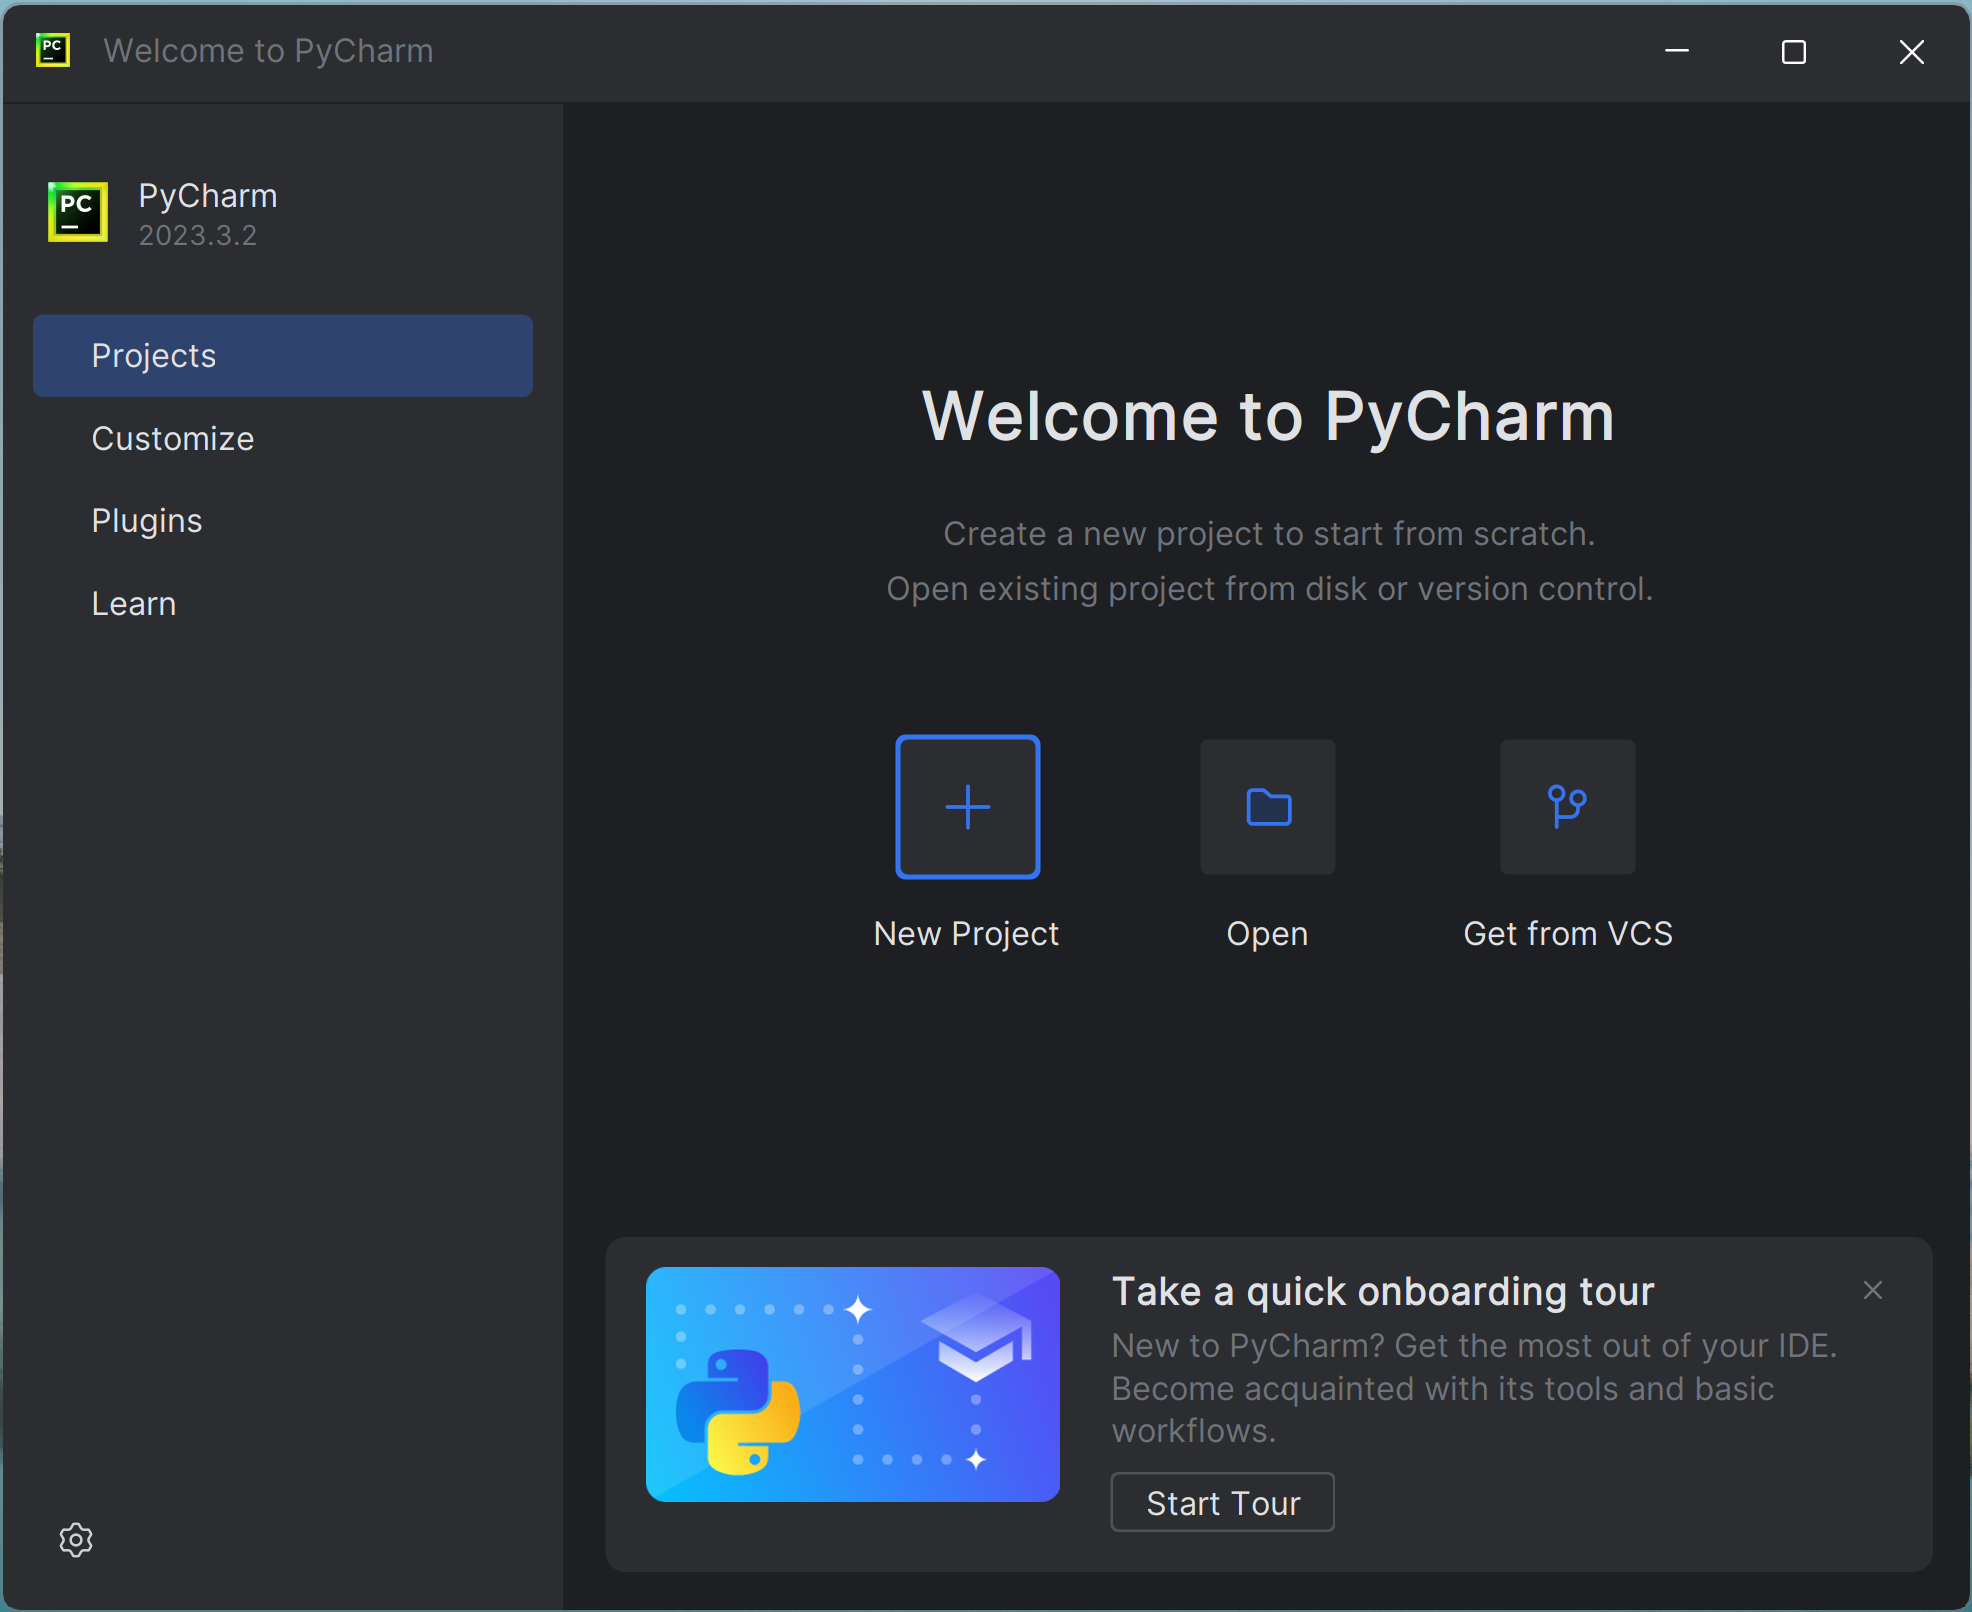 PyCharm welcome screen